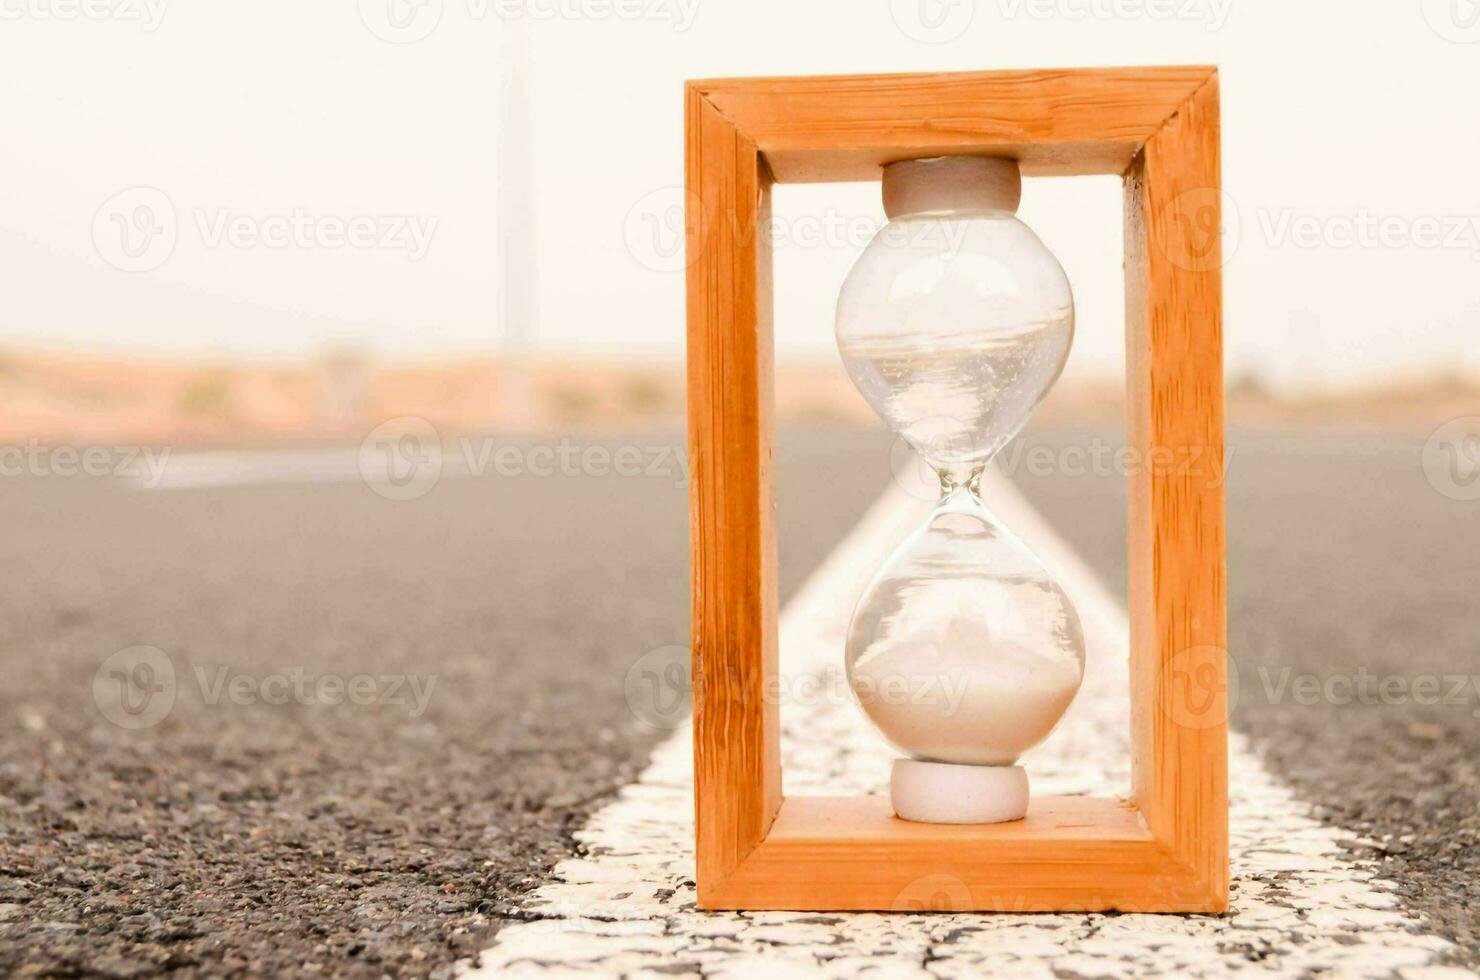 Hourglass on the ground photo